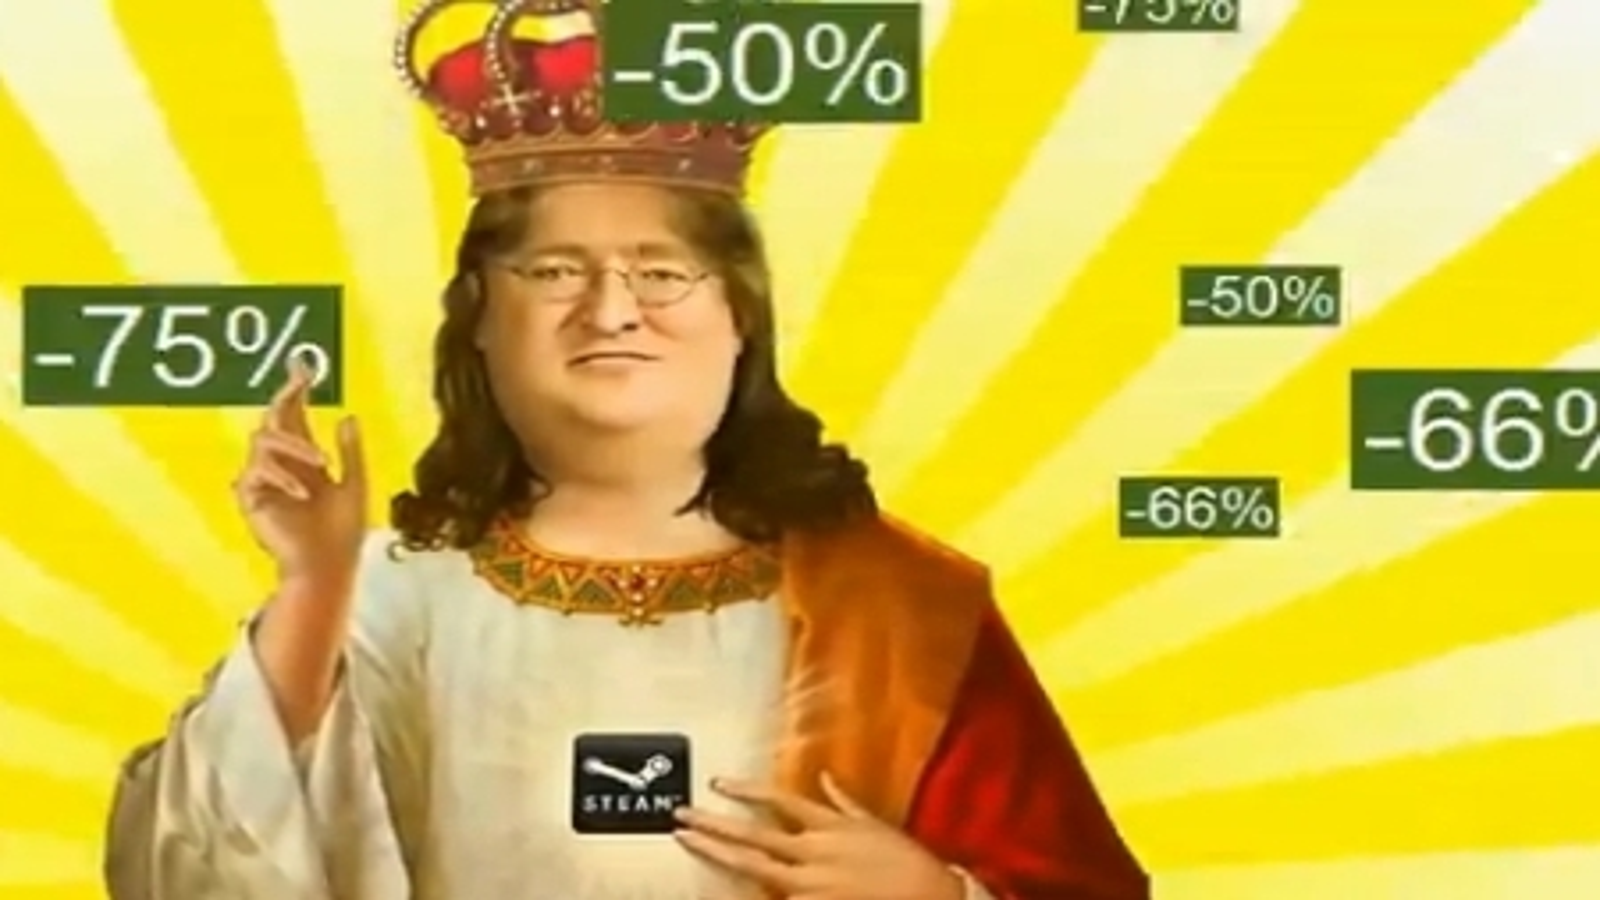 Gabe Newell is worth $1.5 billion